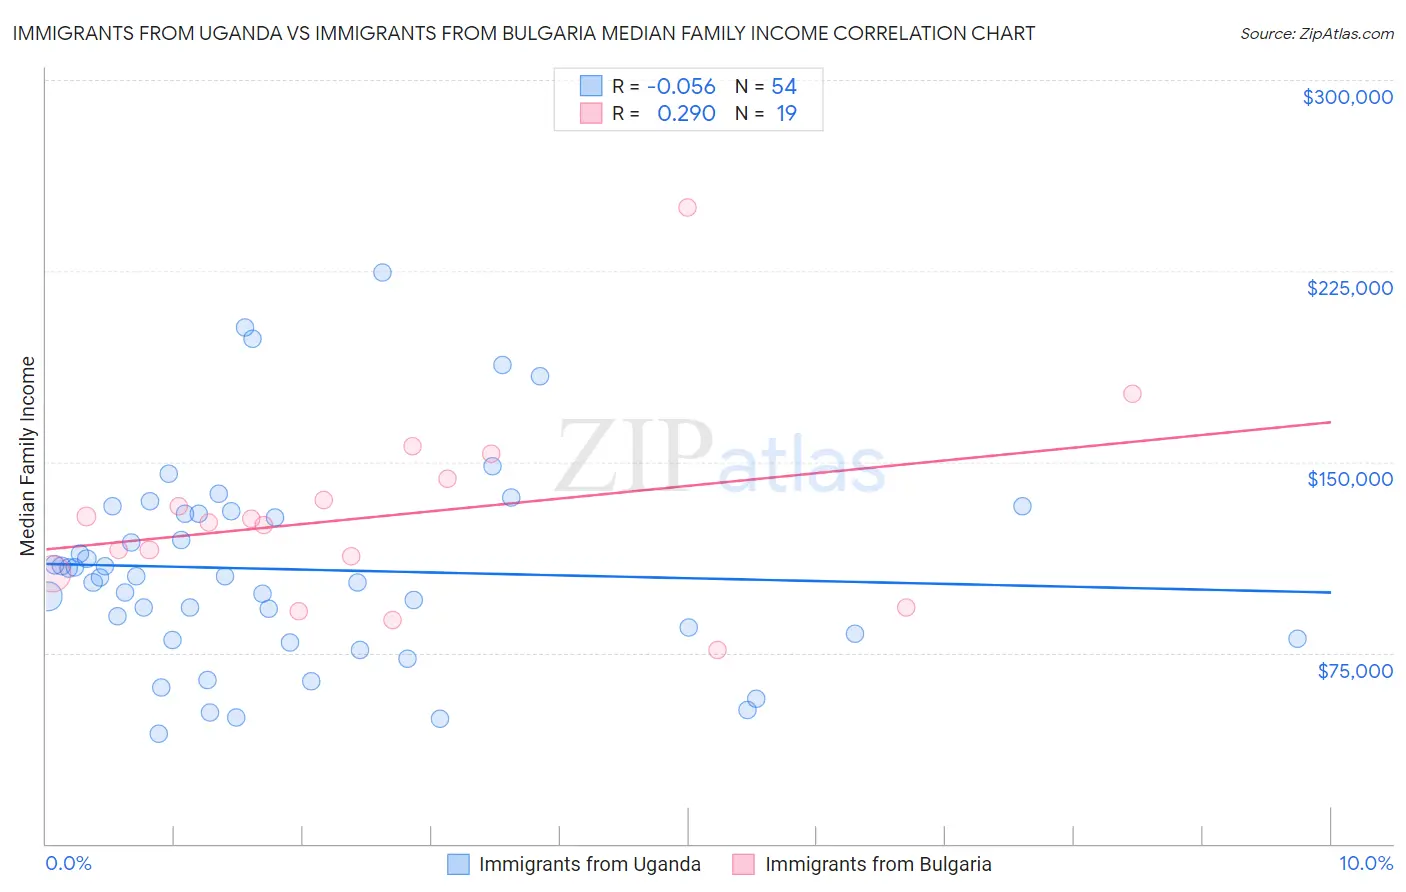 Immigrants from Uganda vs Immigrants from Bulgaria Median Family Income